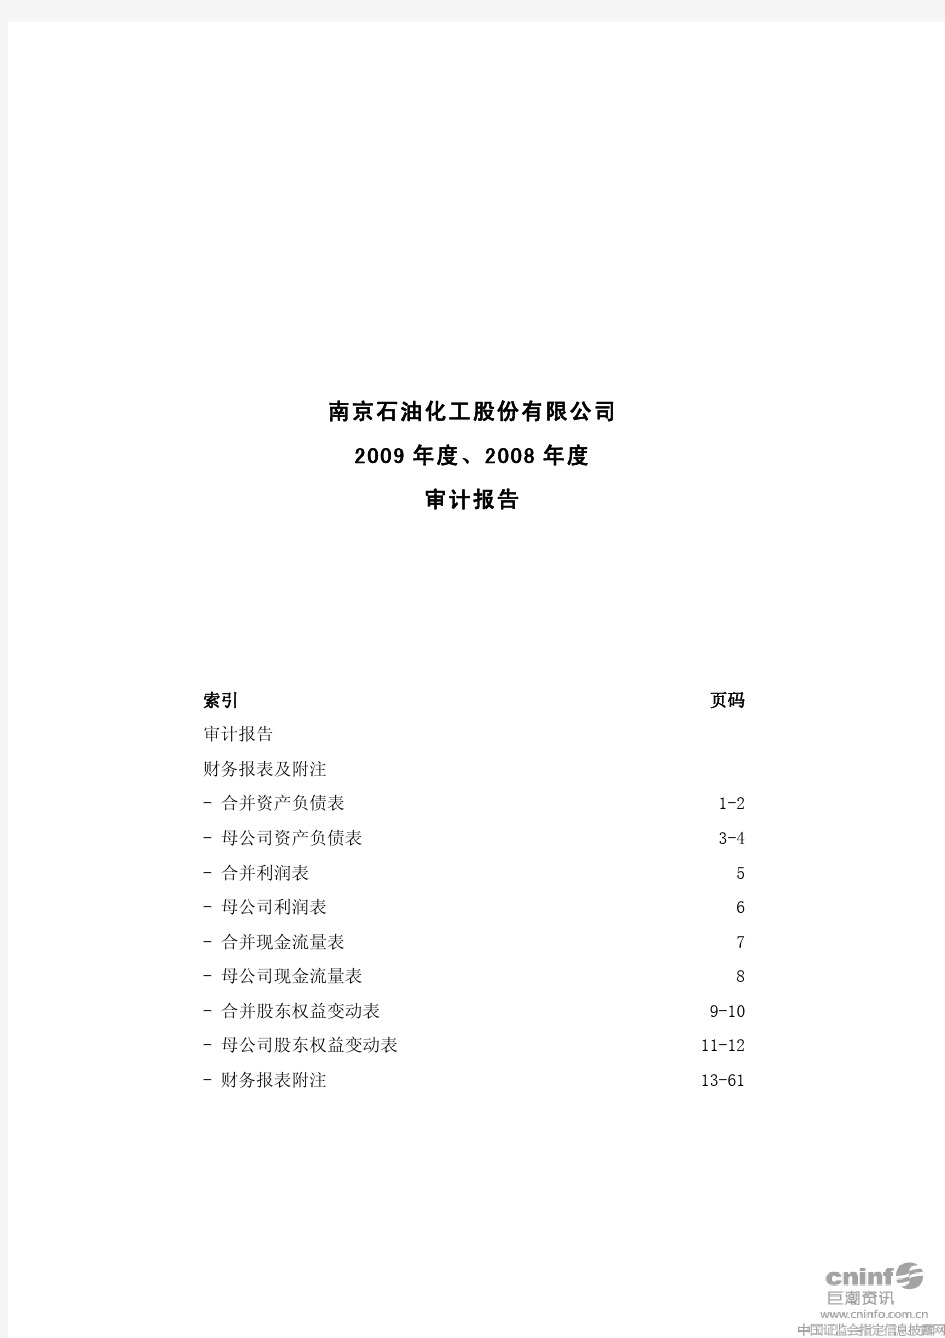 ST钛白：南京石油化工股份有限公司2009年度、2008年度审计报告 2010-06-05